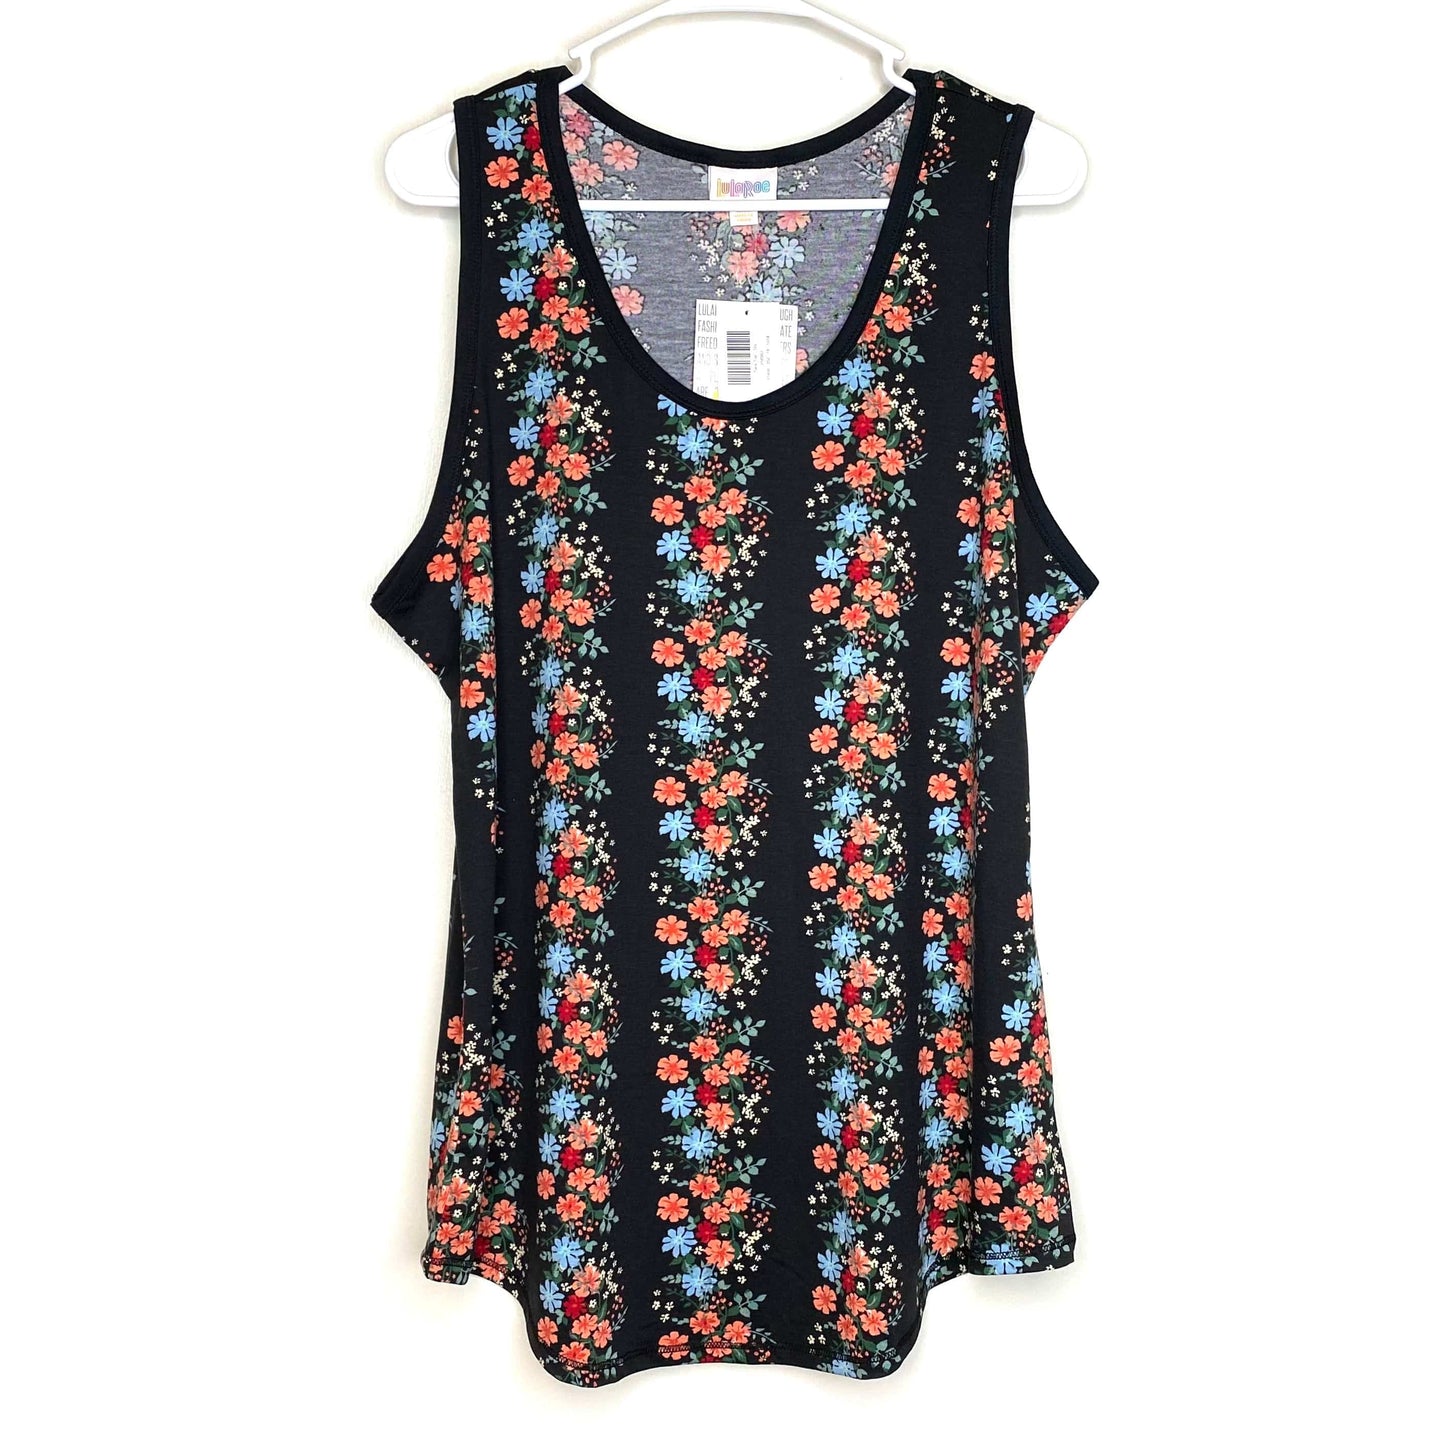 LuLaRoe | Floral Sleeveless Tank Top Shirt | Color: Black | Size: 3XL | NWT